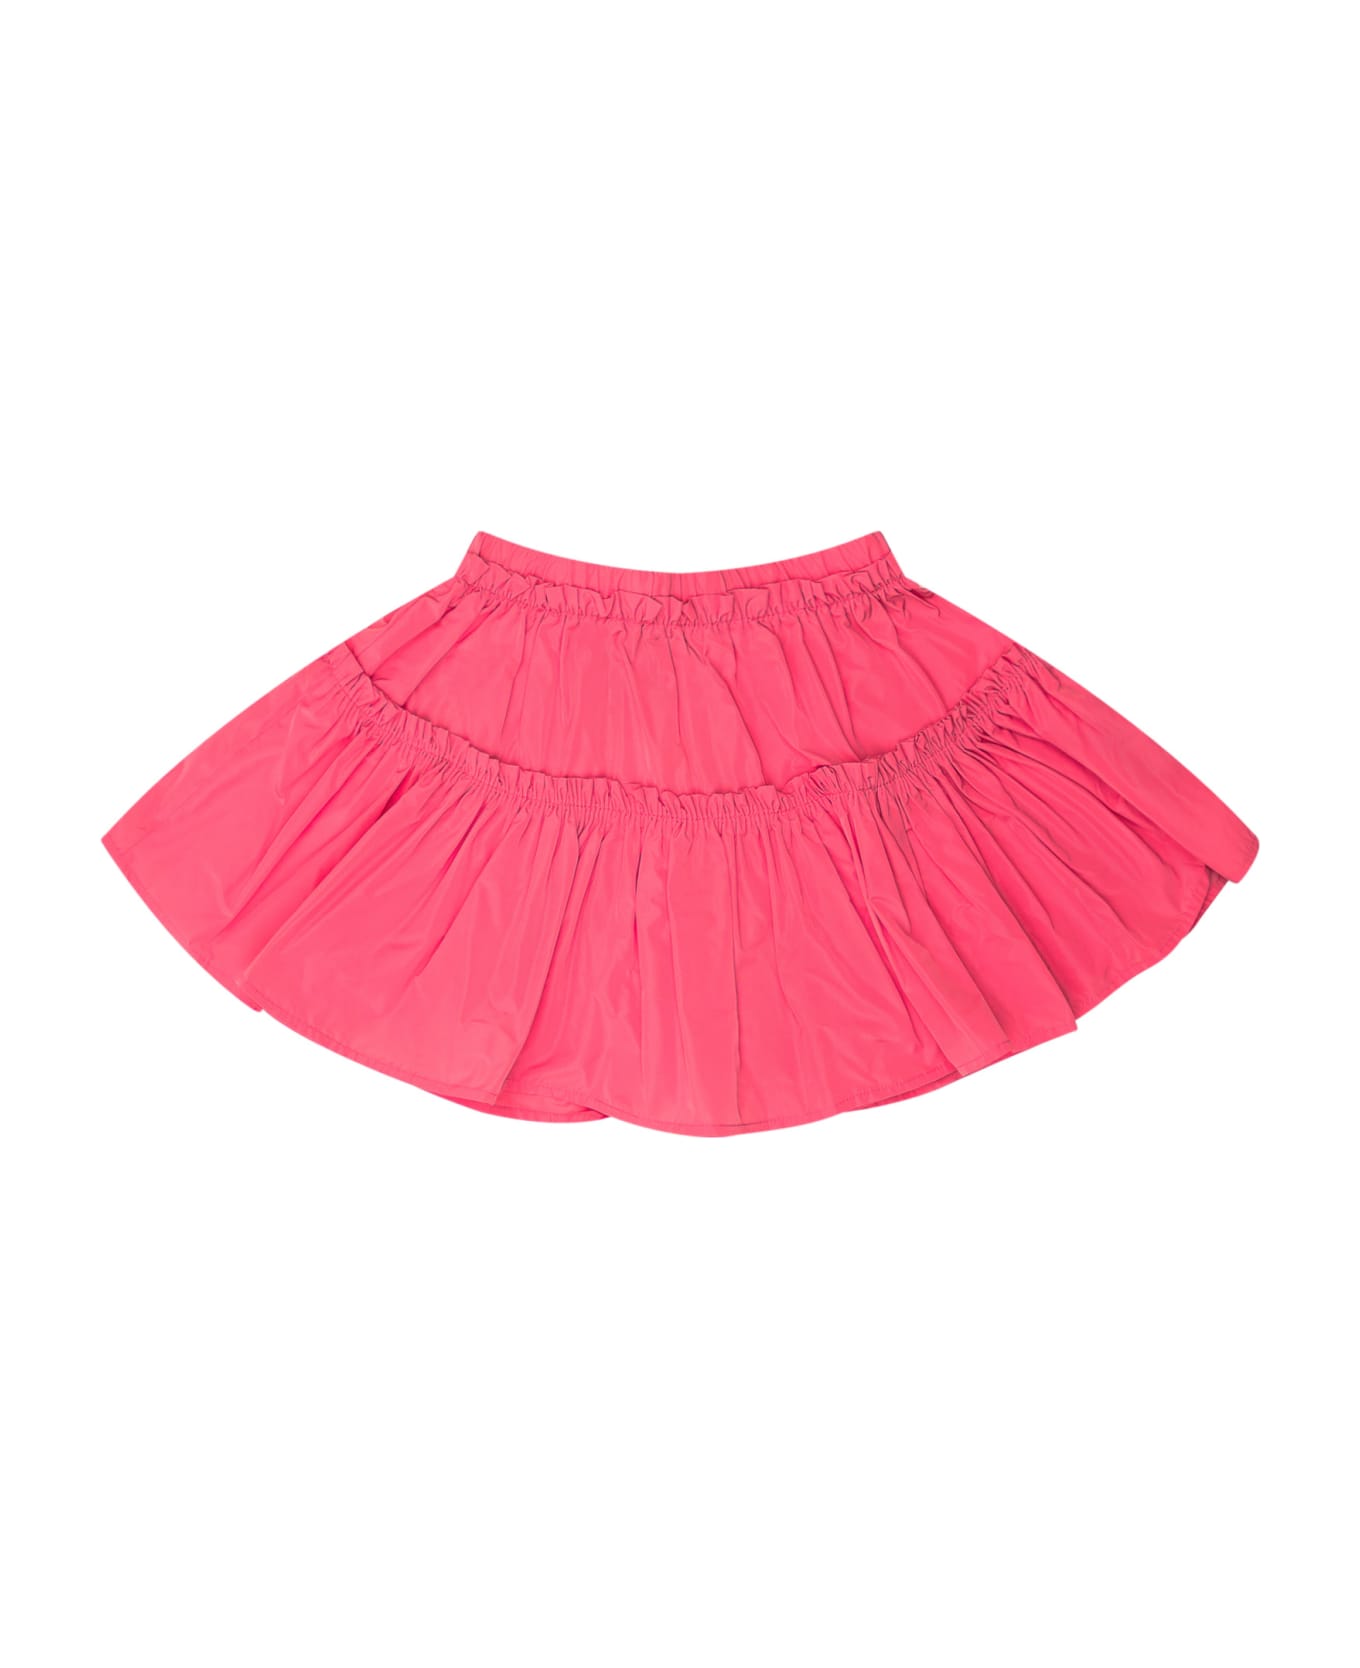 TwinSet Ruffle Skirt - CAMELIA ROSE